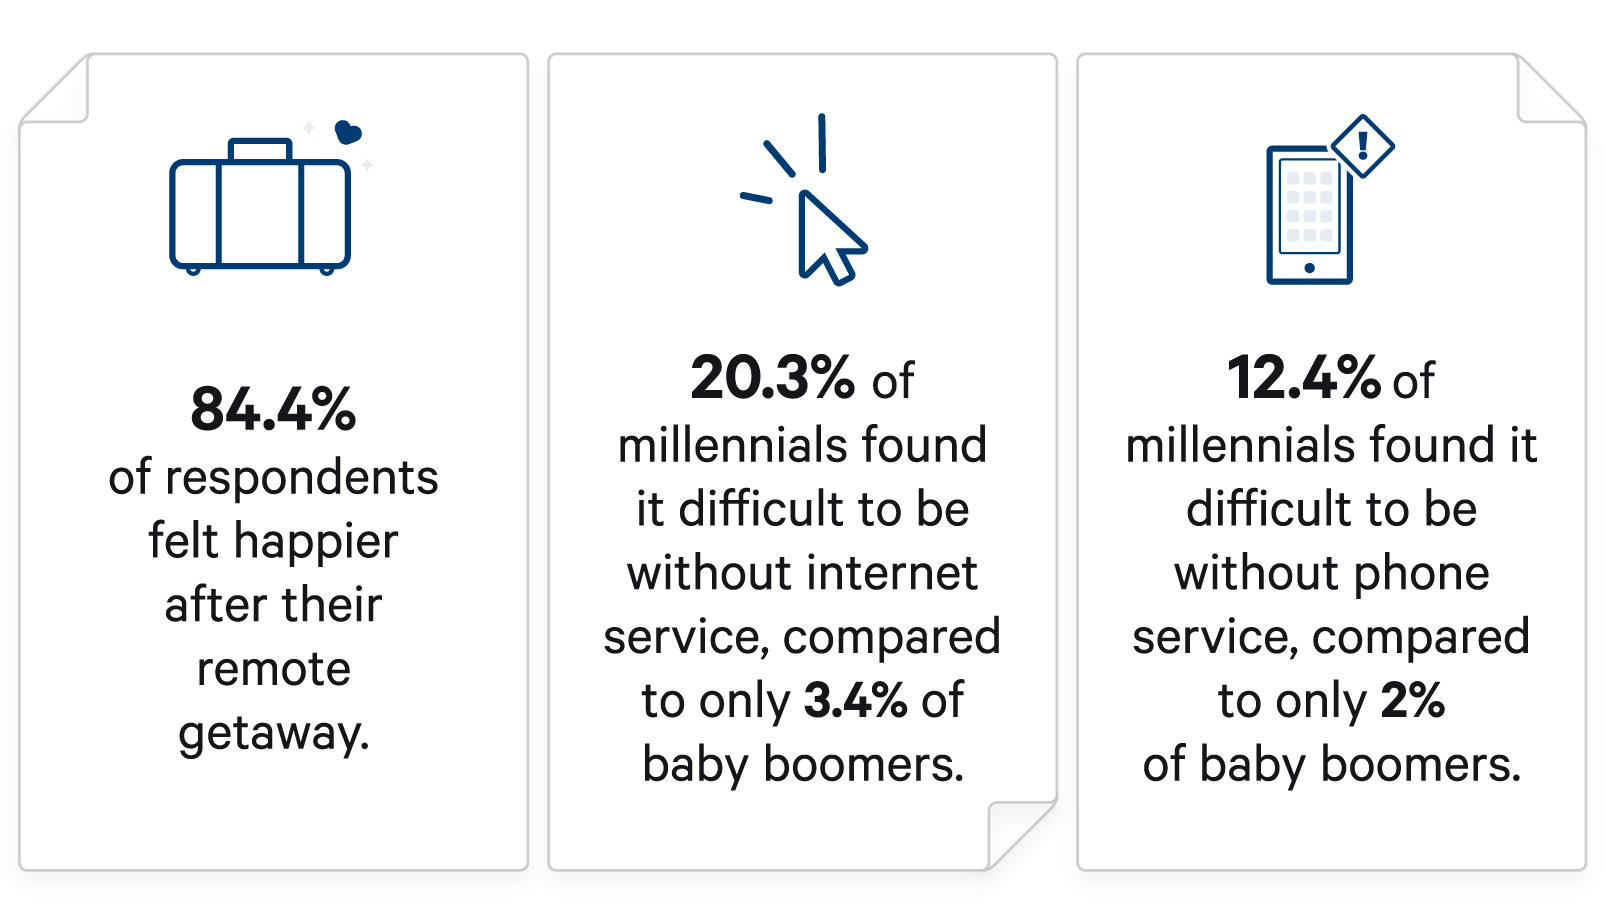 Remote getaway percentages by generation.